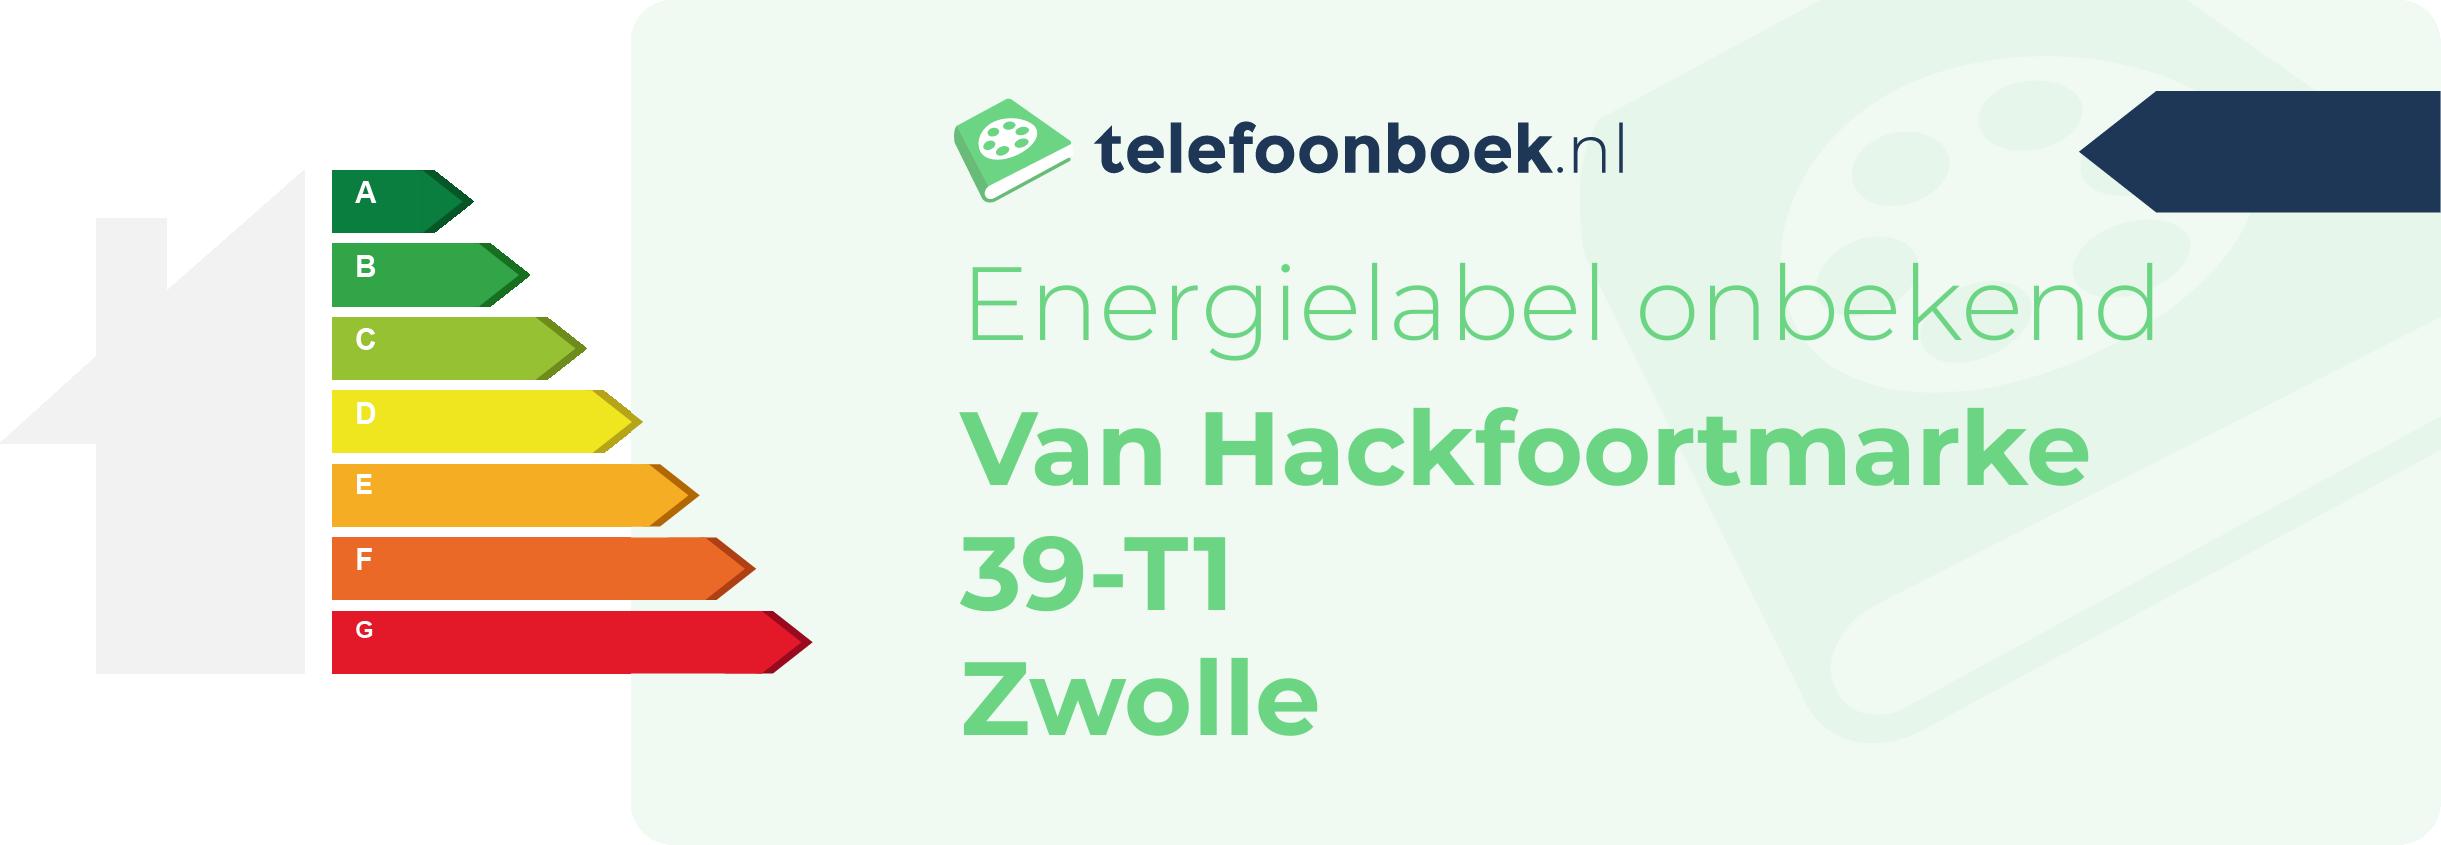 Energielabel Van Hackfoortmarke 39-T1 Zwolle